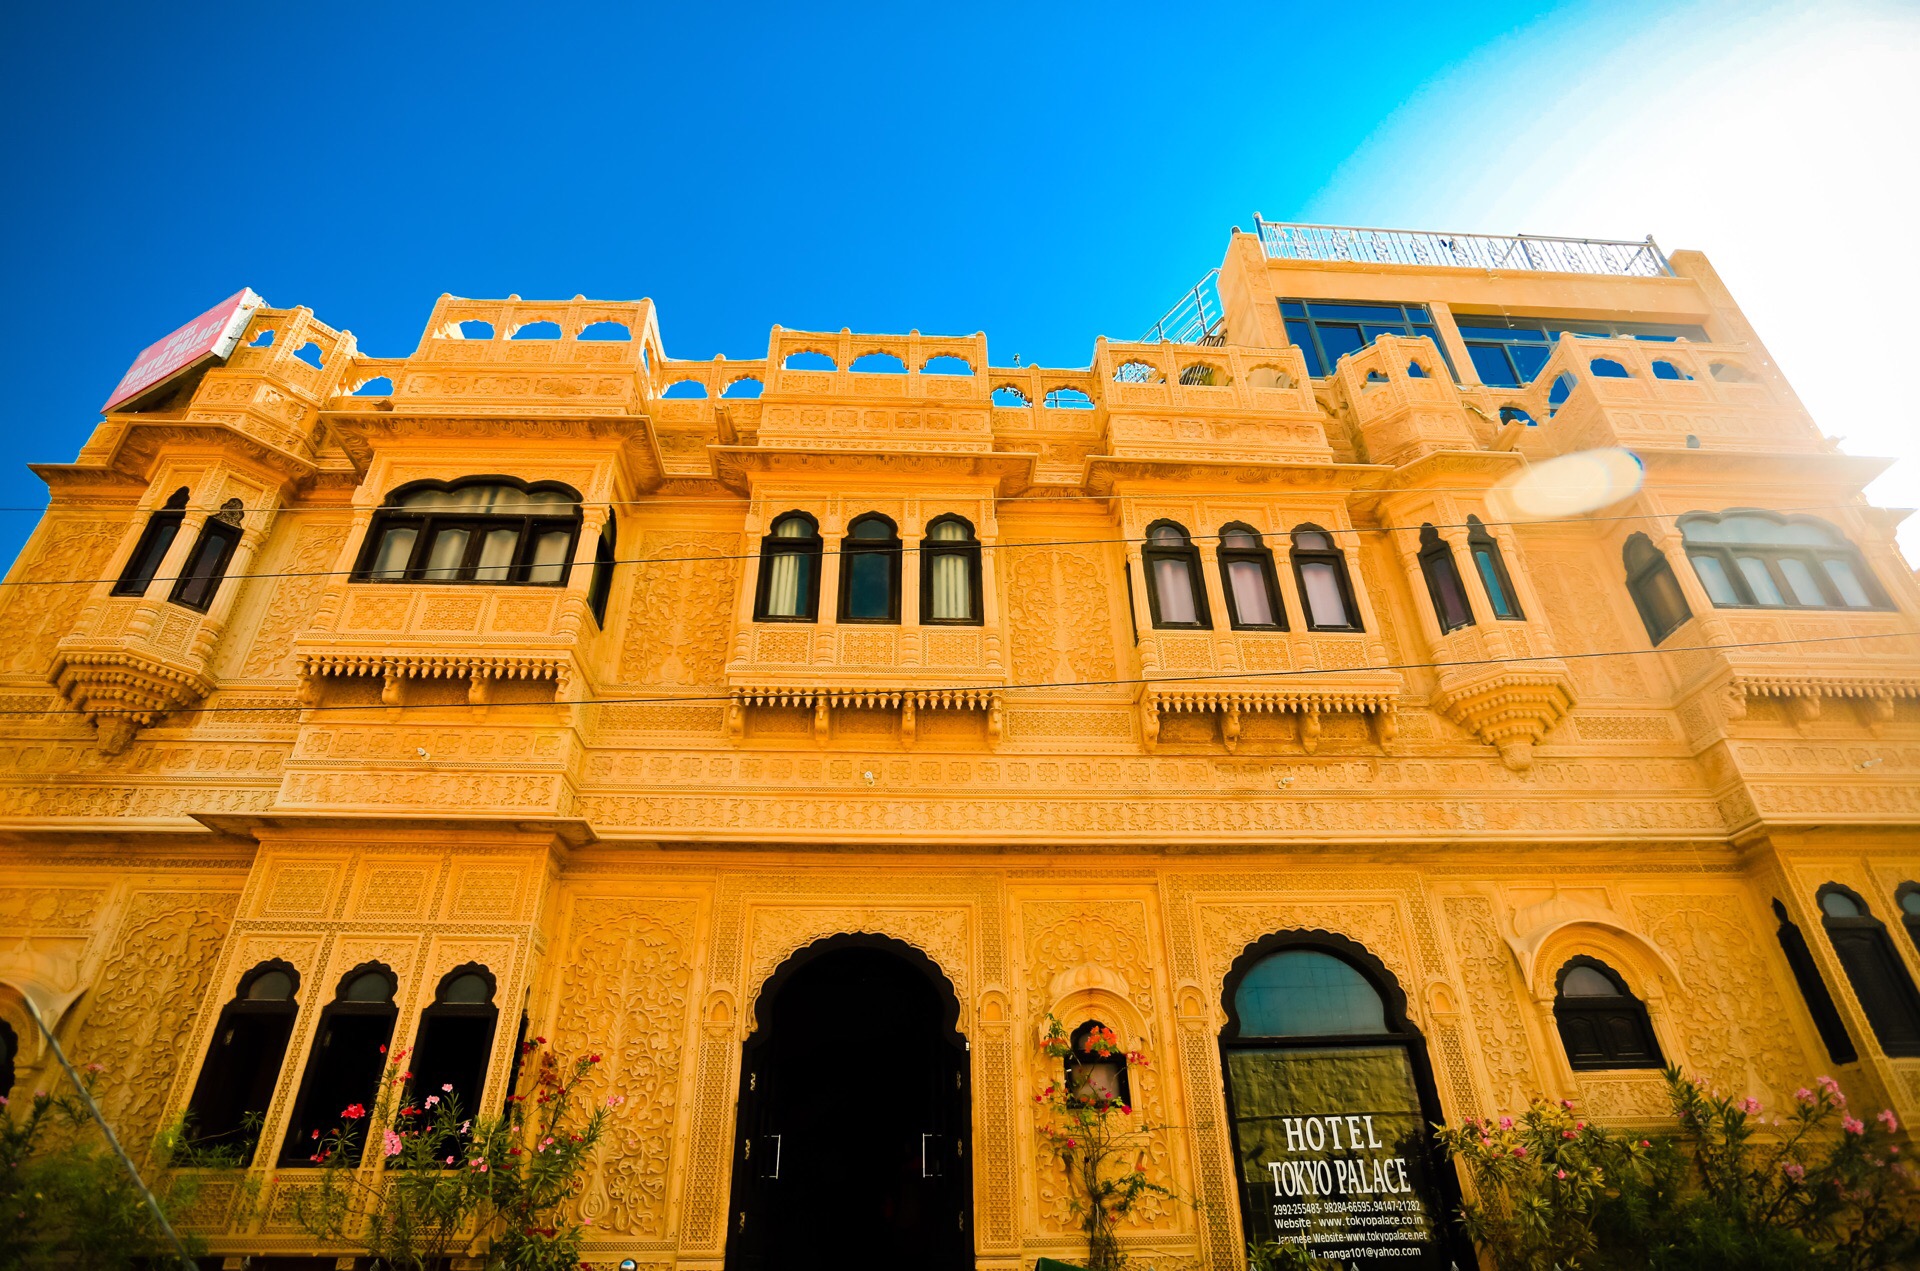 tokyo palace hotel  早上6：30左右就抵达了Jaisalmer。酒店的来接的司机